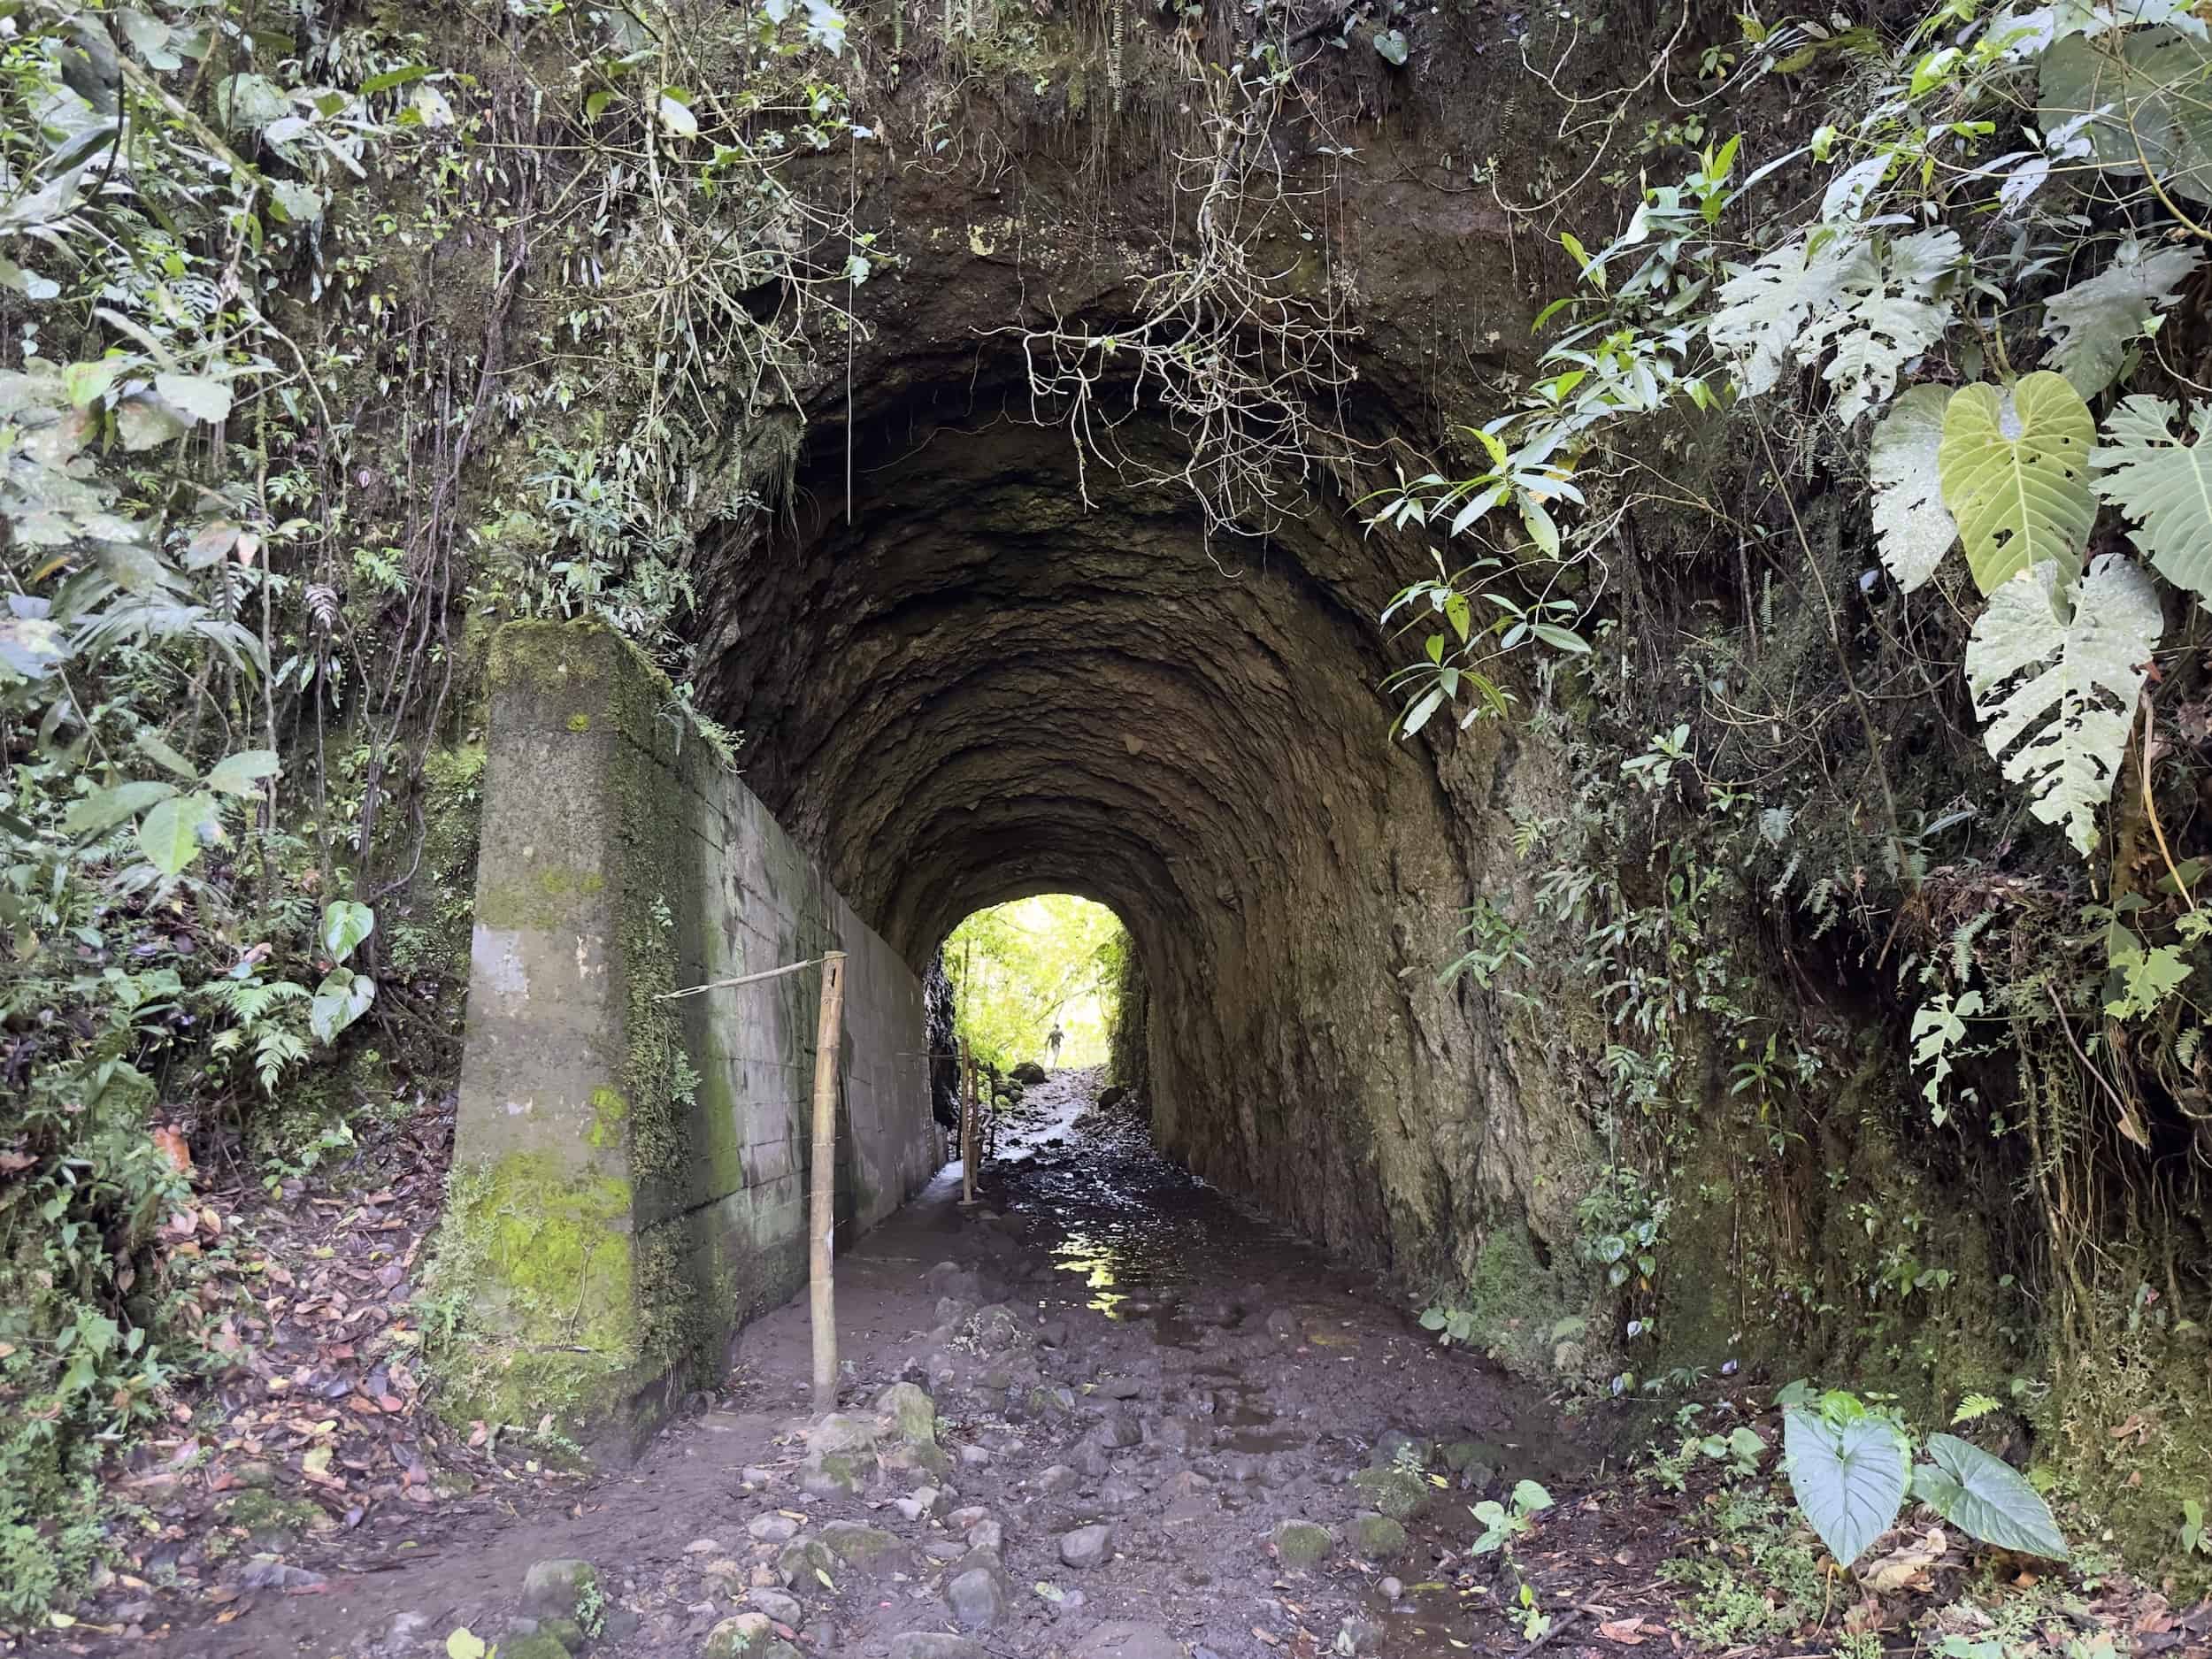 Tunnel at Santa Rita Nature Reserve in Boquía, Salento, Quindío, Colombia